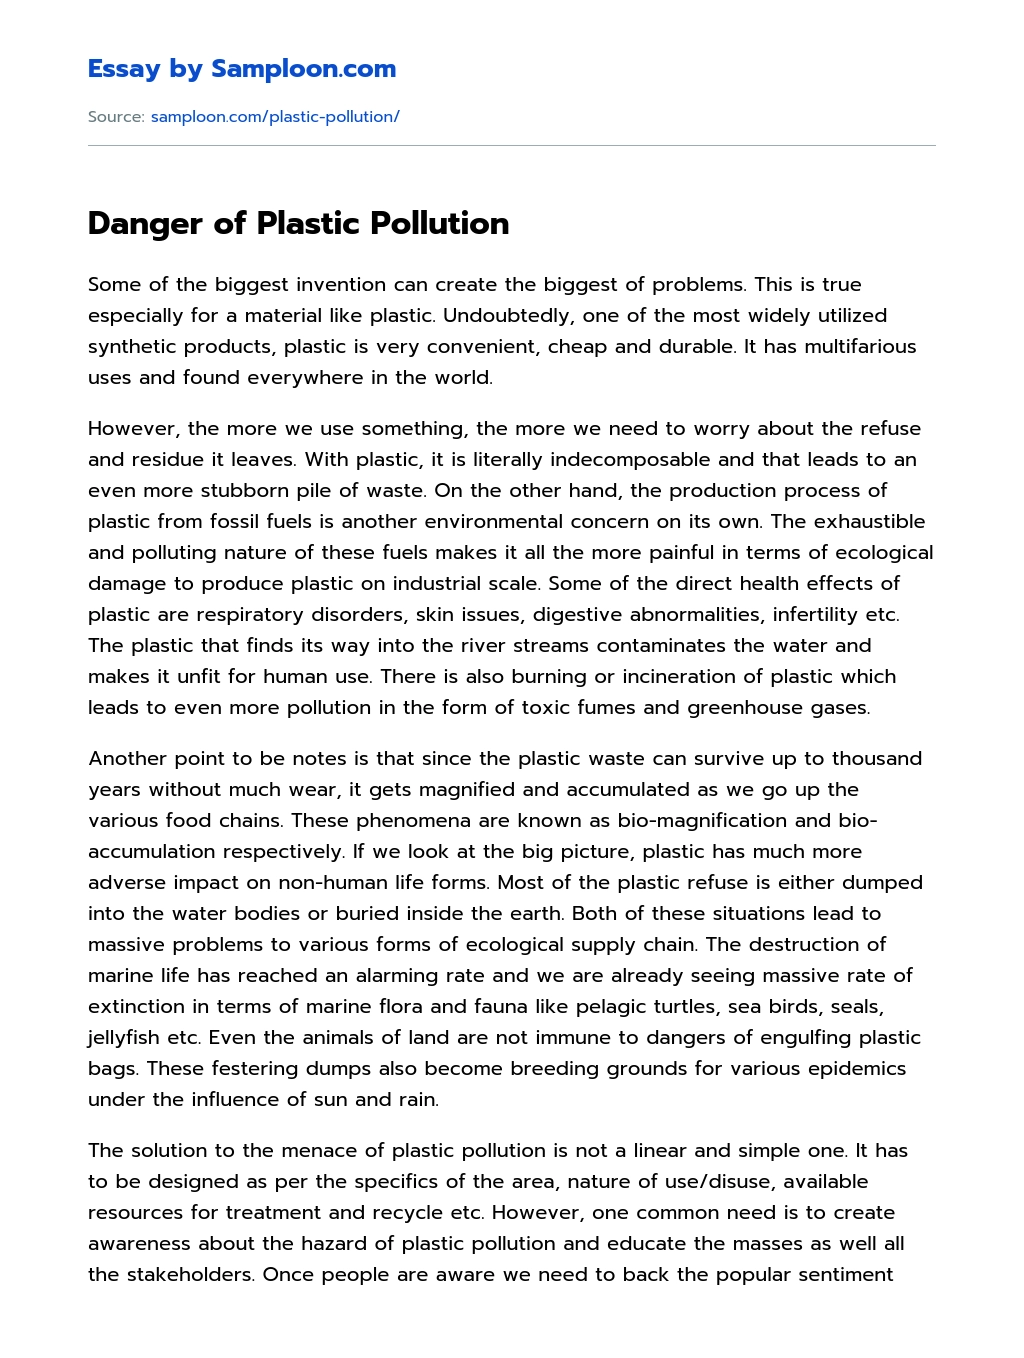 Danger of Plastic Pollution essay